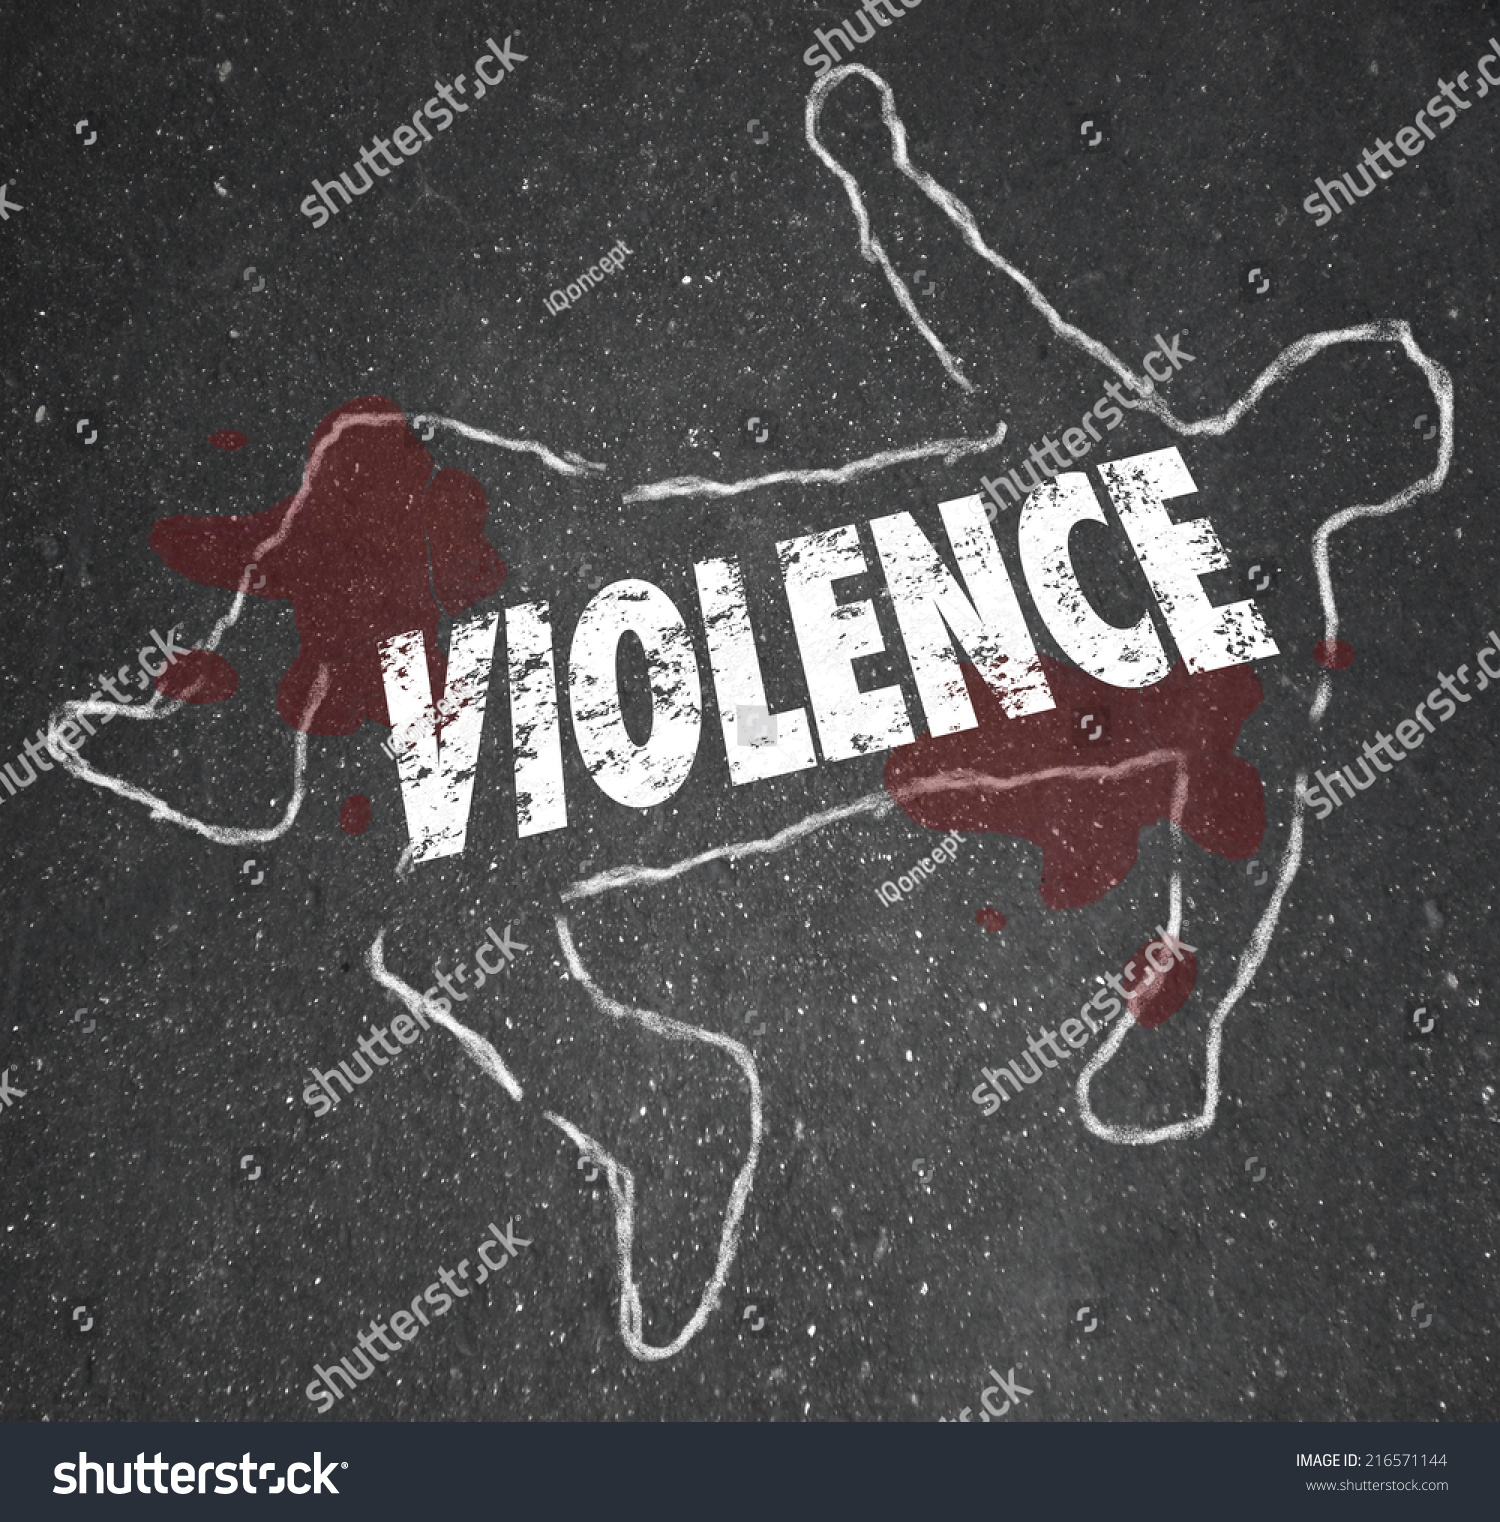 Violence Define Violence at Dictionarycom